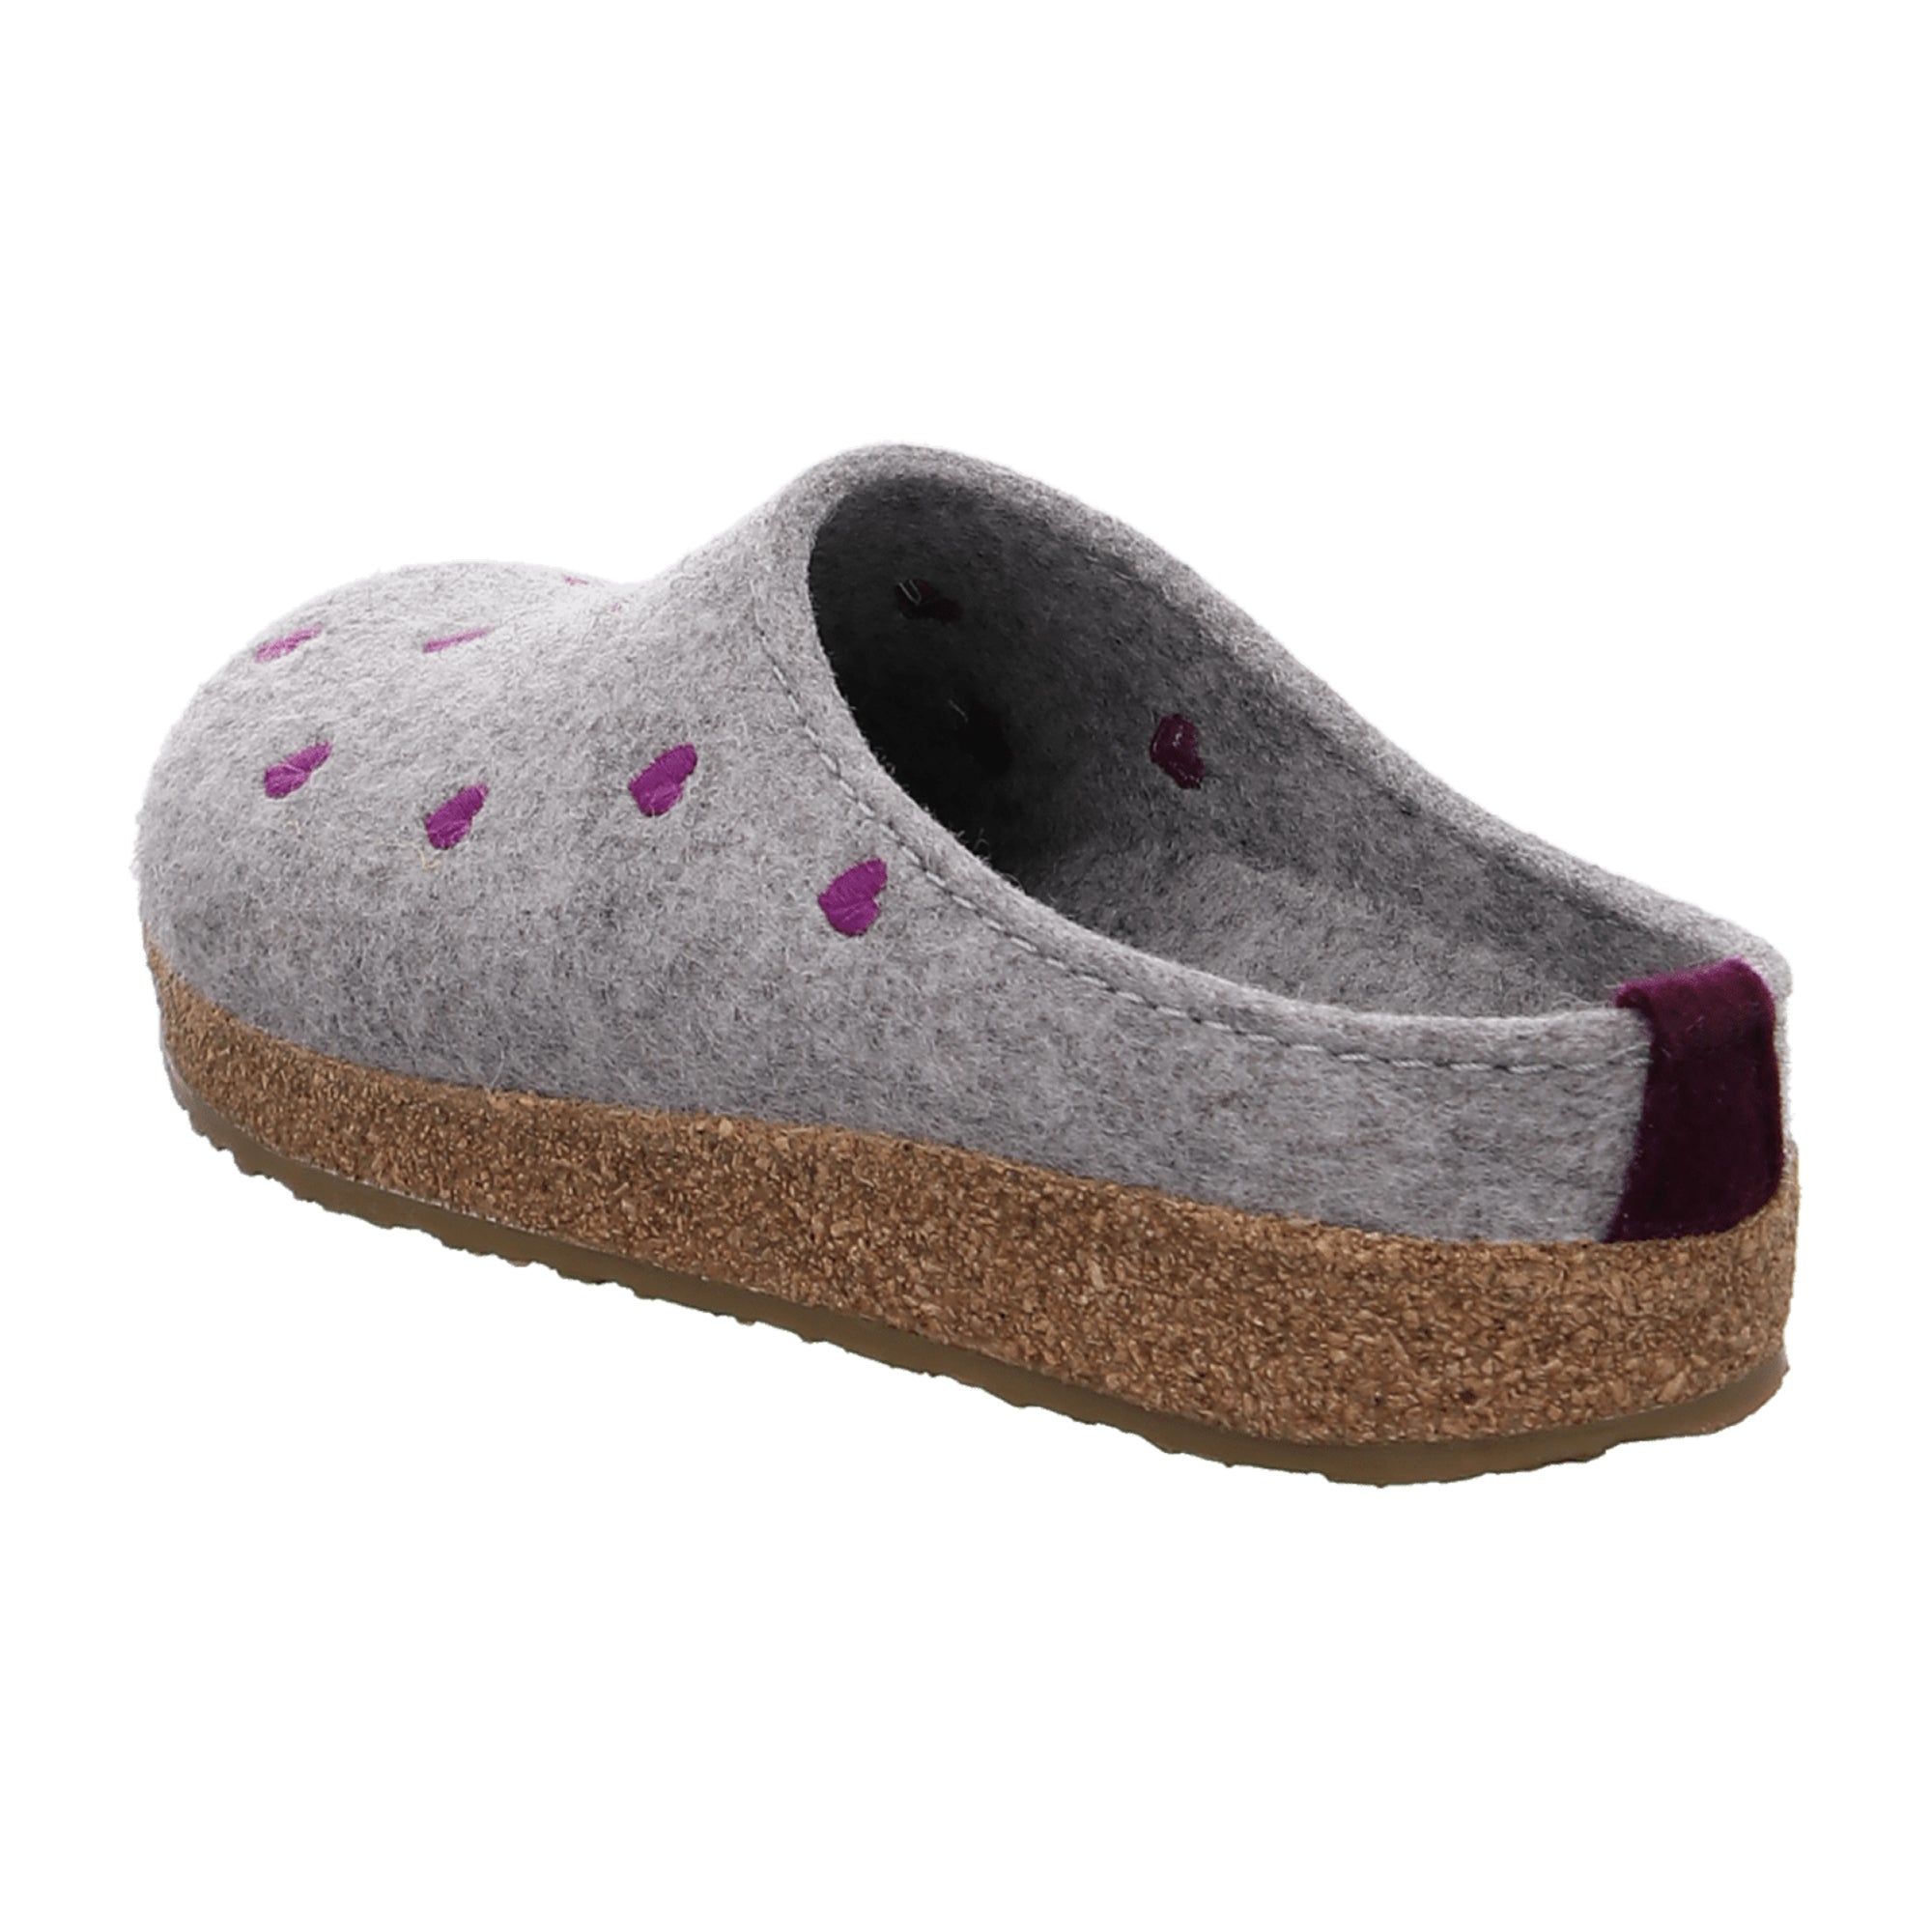 Haflinger 741031 Women's Stylish Gray Slippers - Comfort & Durability